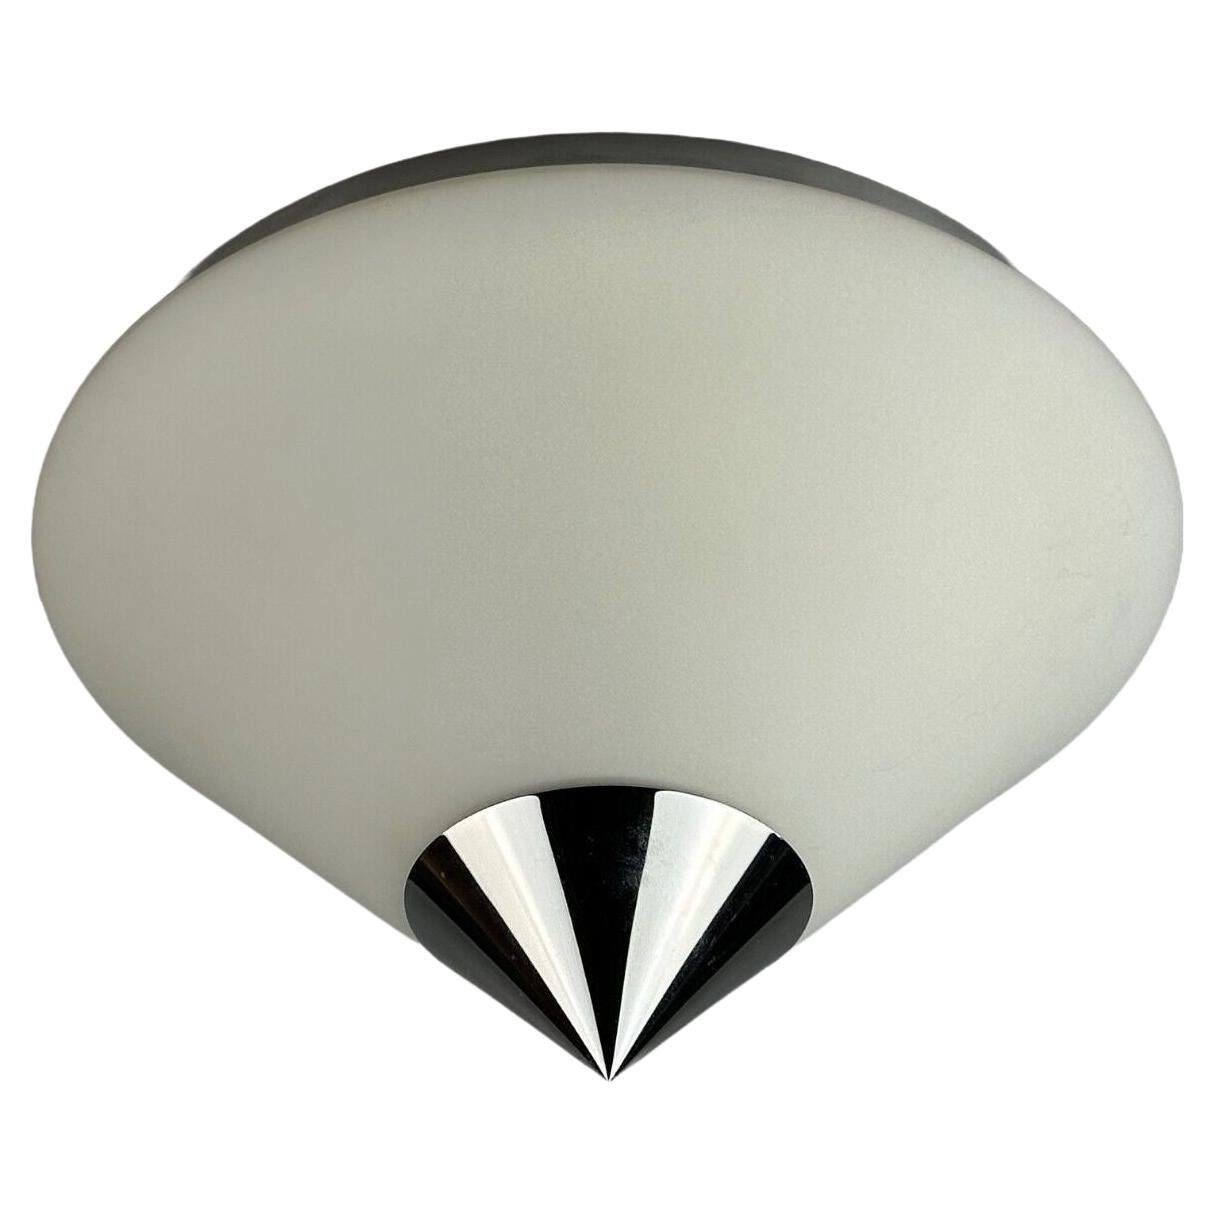 60s 70s ceiling lamp wall lamp by Limburg Leuchten Germany glass chrome